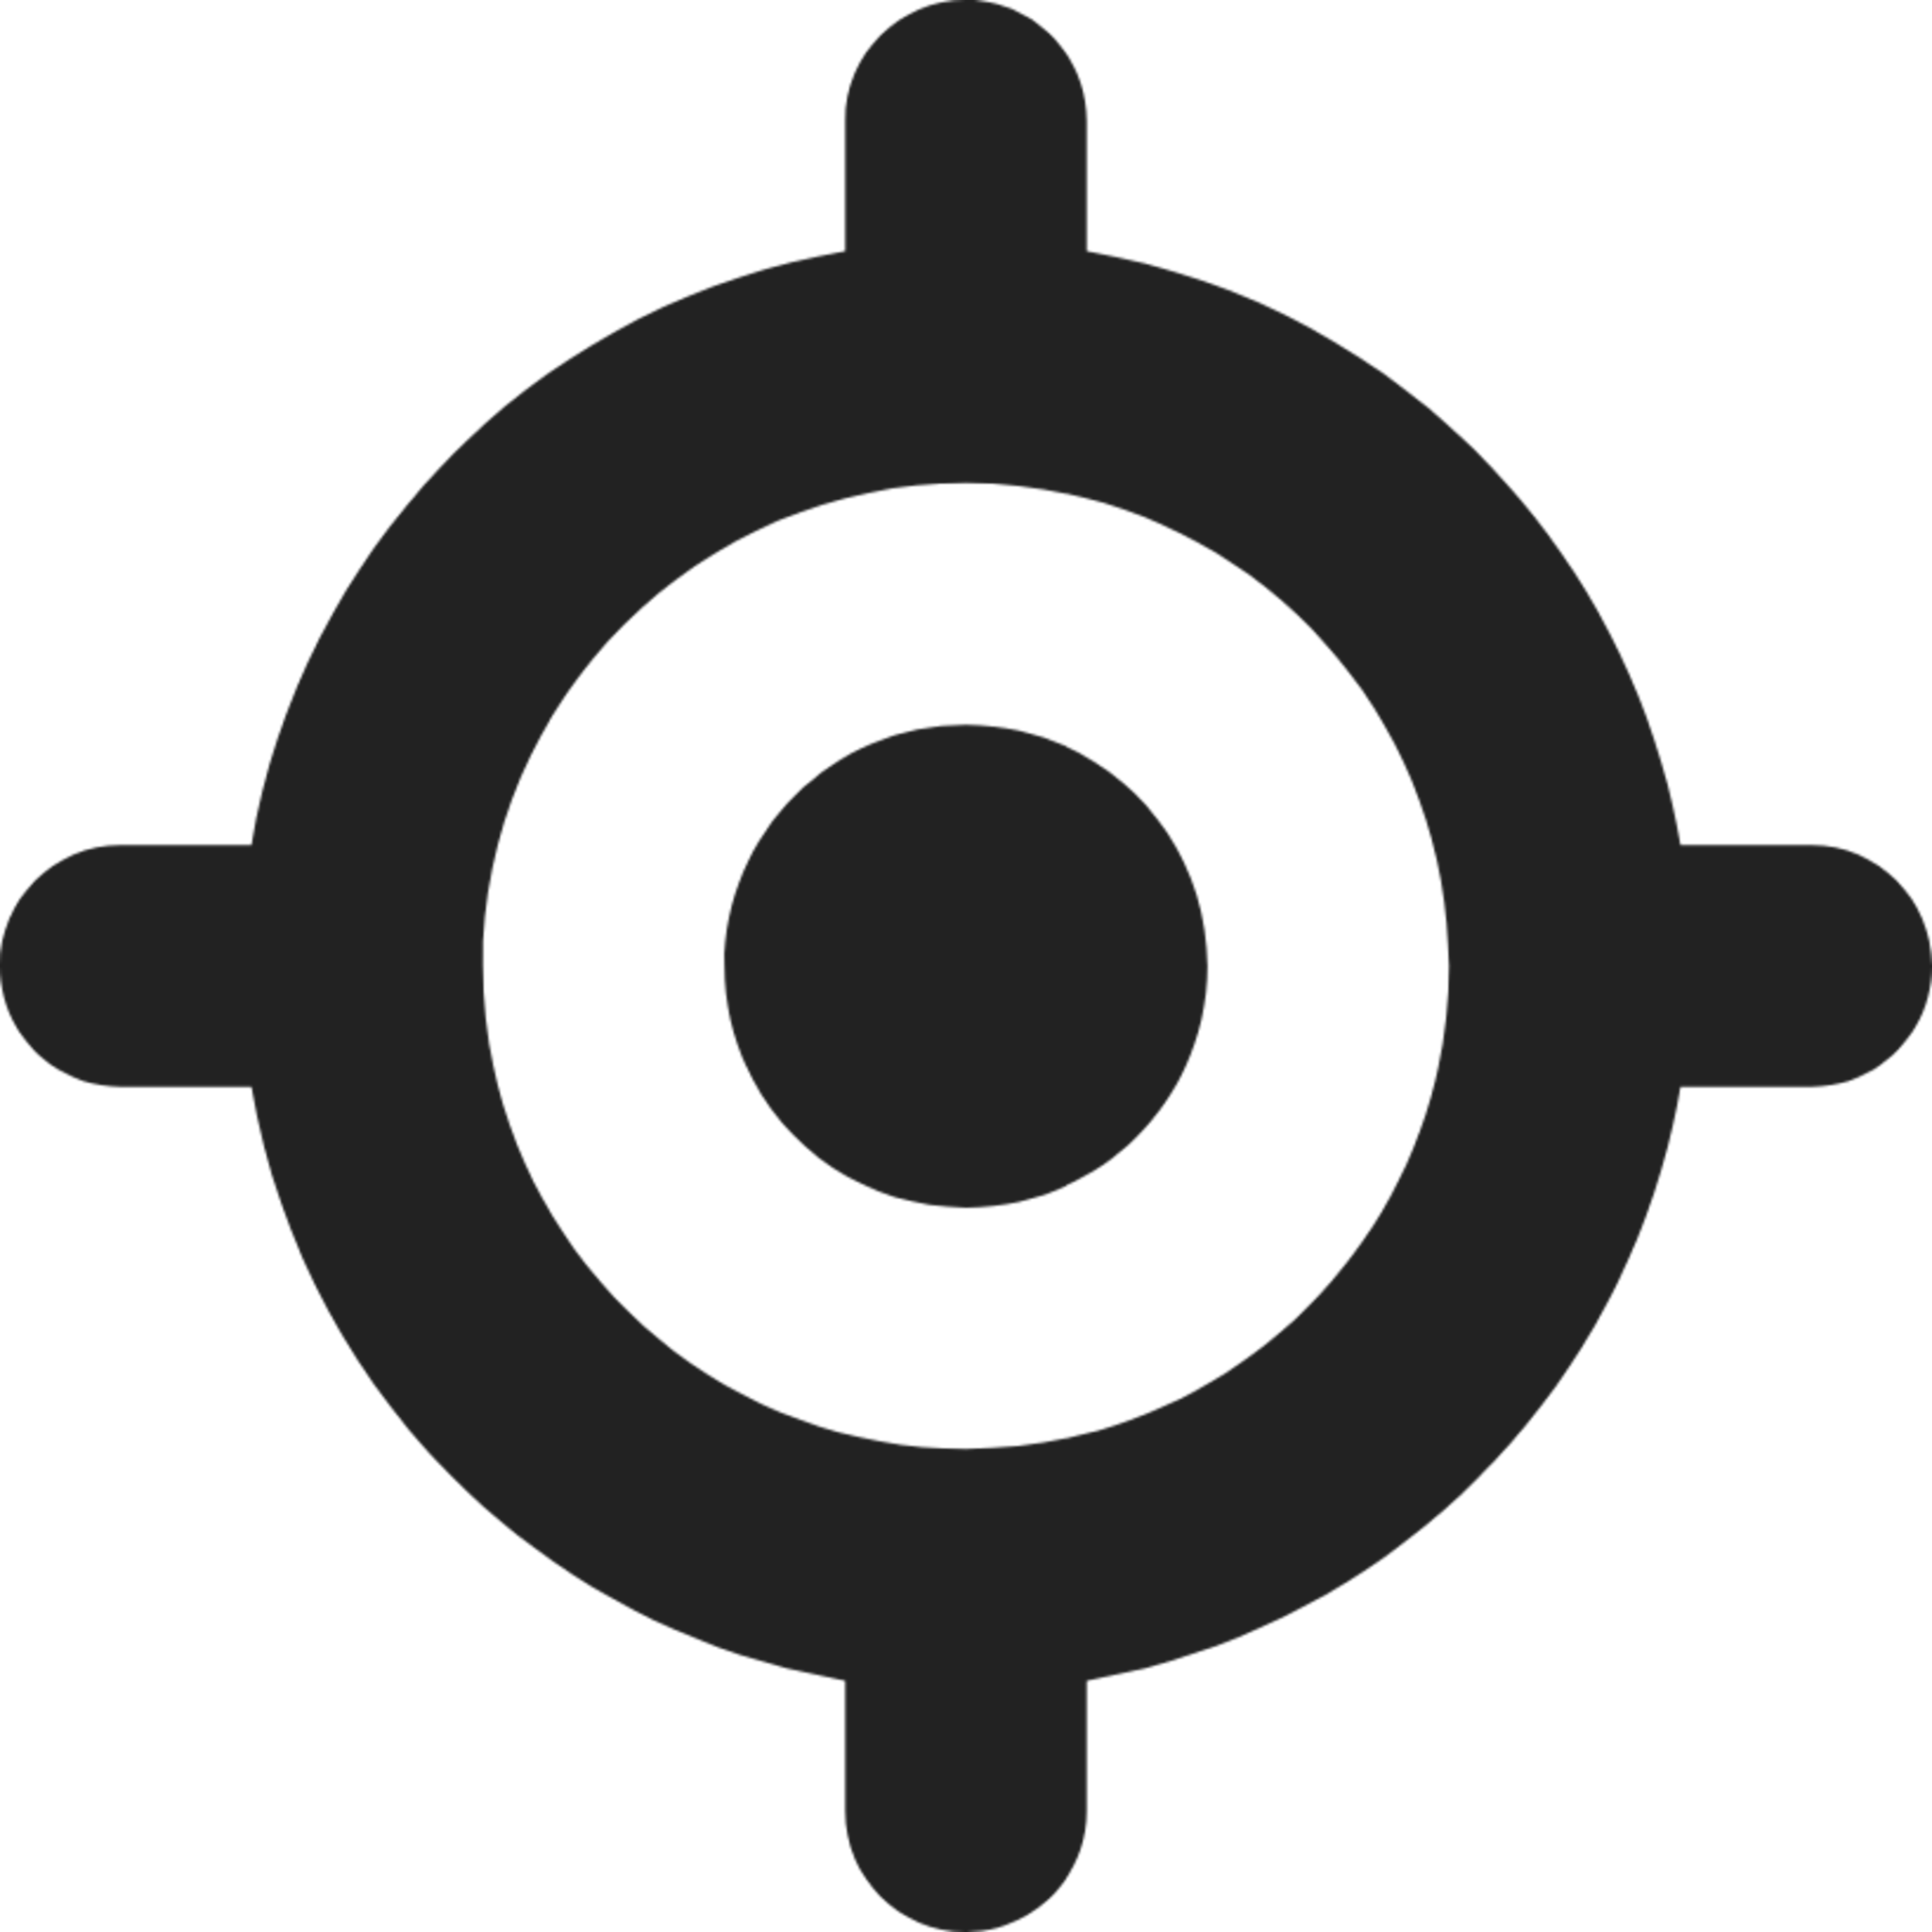 picker target aim sight icon